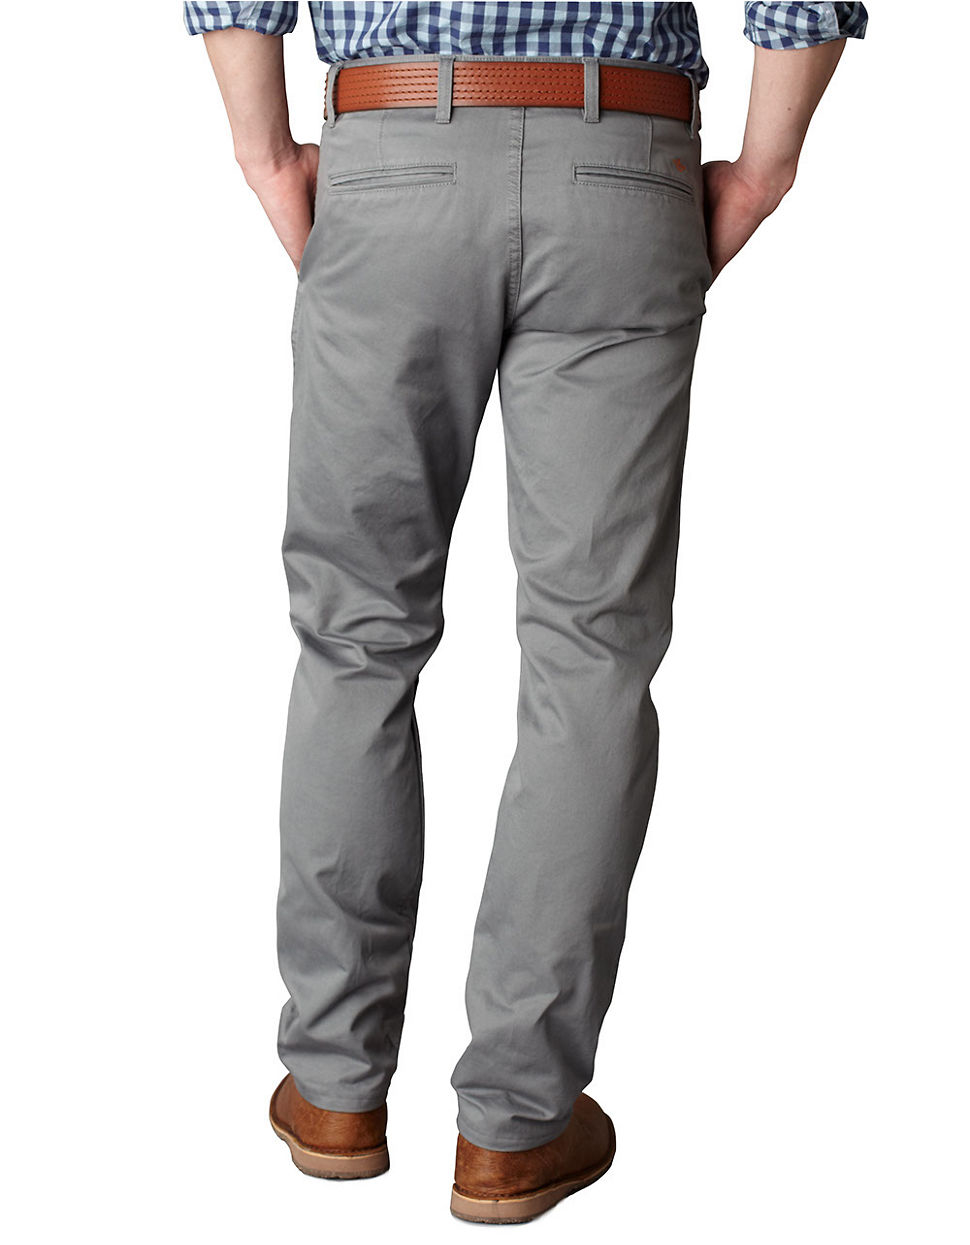 Dockers Cotton Straight-Leg Alpha Khaki Pants in Grey (Gray) for Men - Lyst